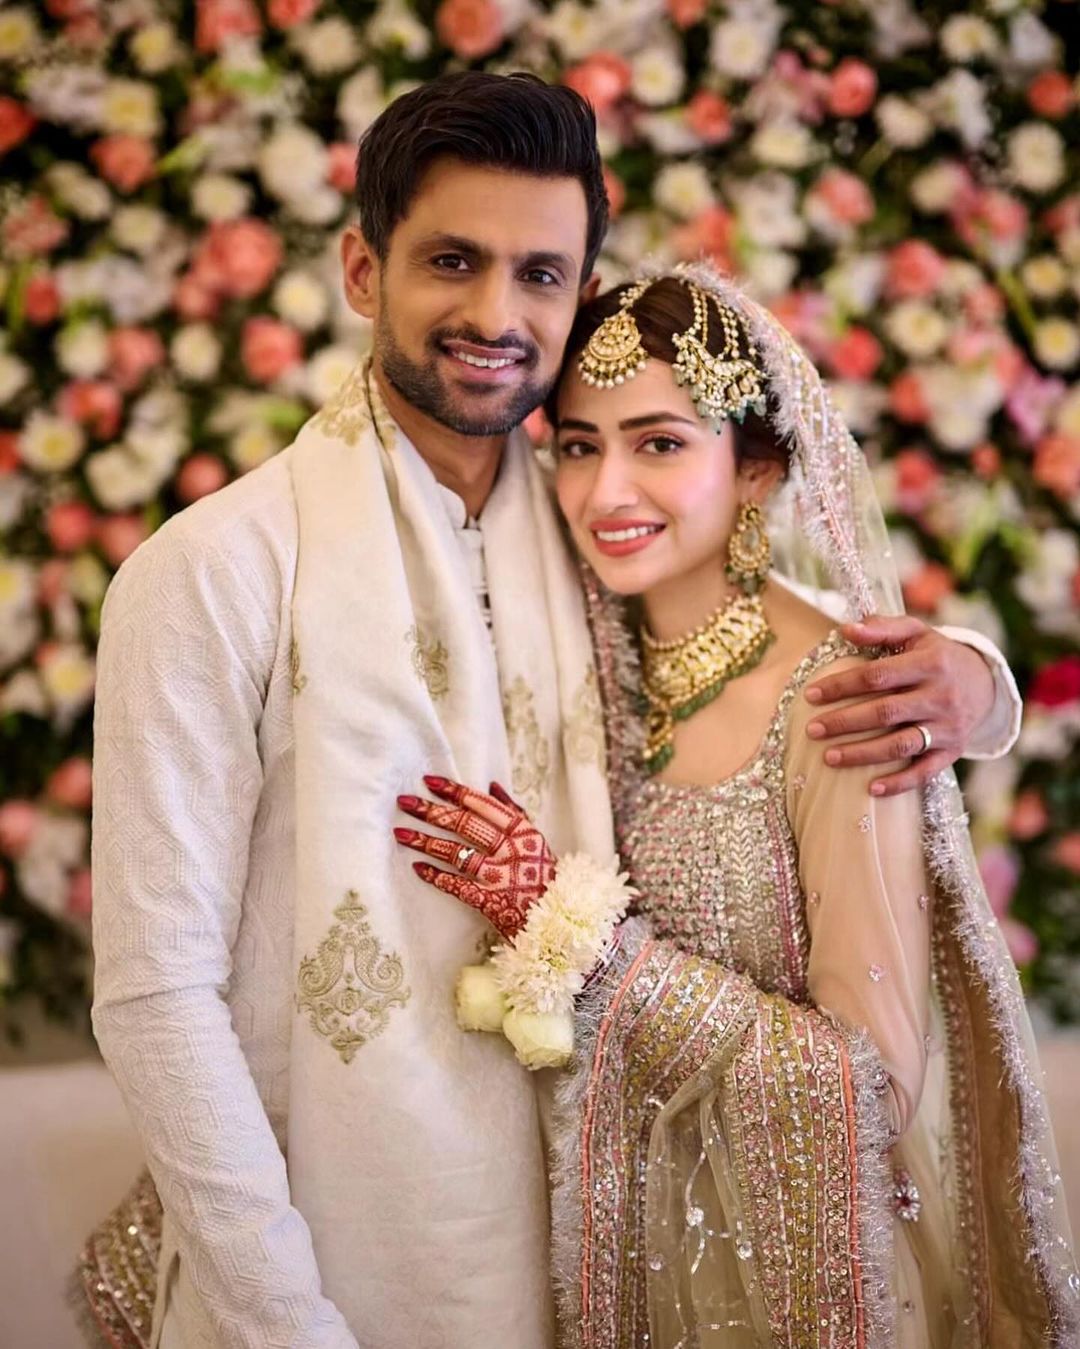 Surprise Wedding of Sana Javed and Shoaib Malik: Share Wedding Pics on Social Media
